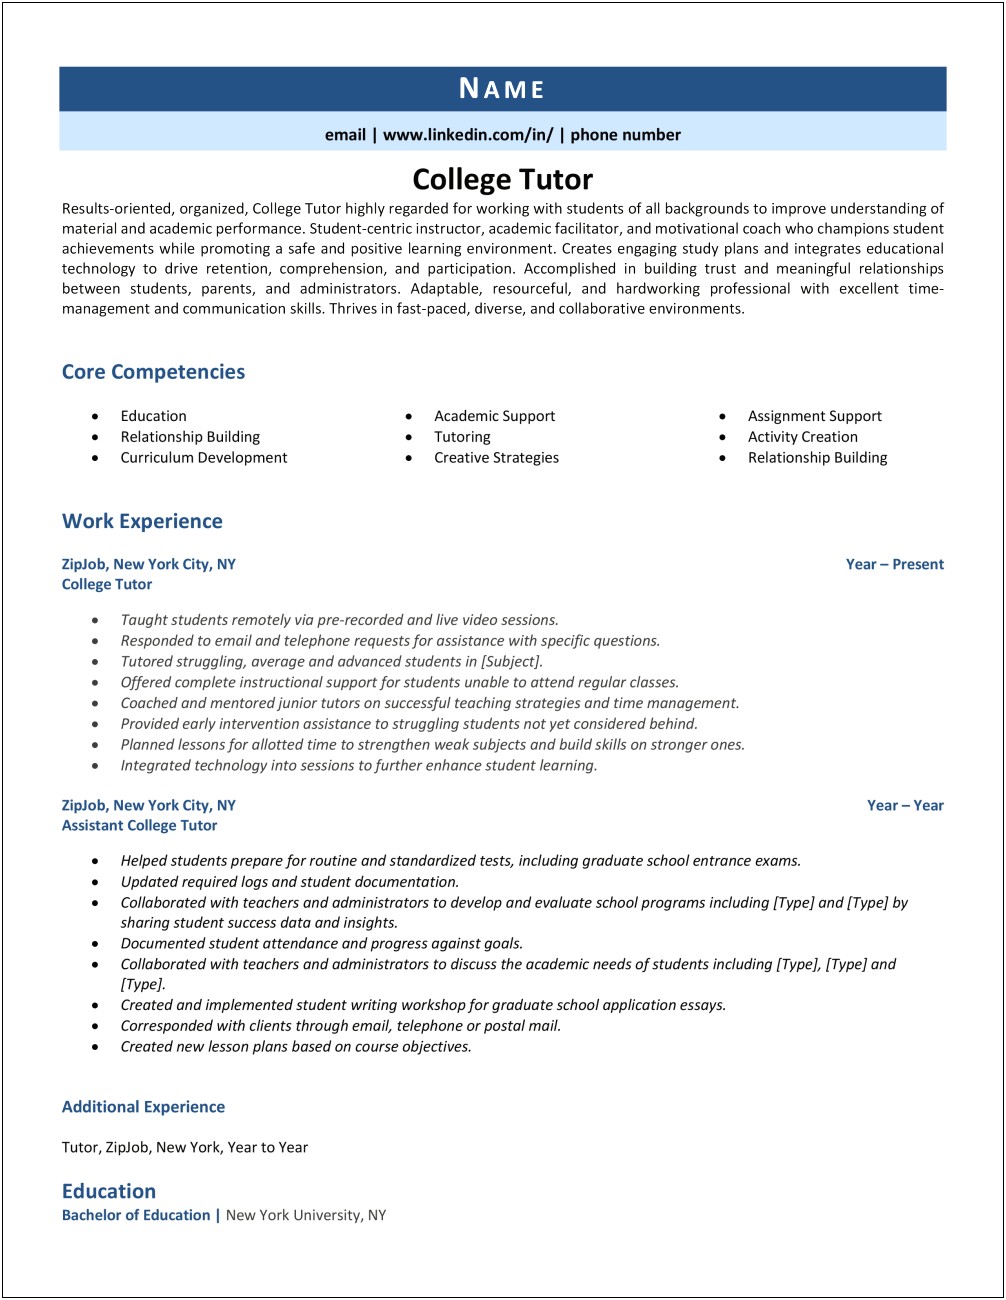 College Tutor Job Description For Resume